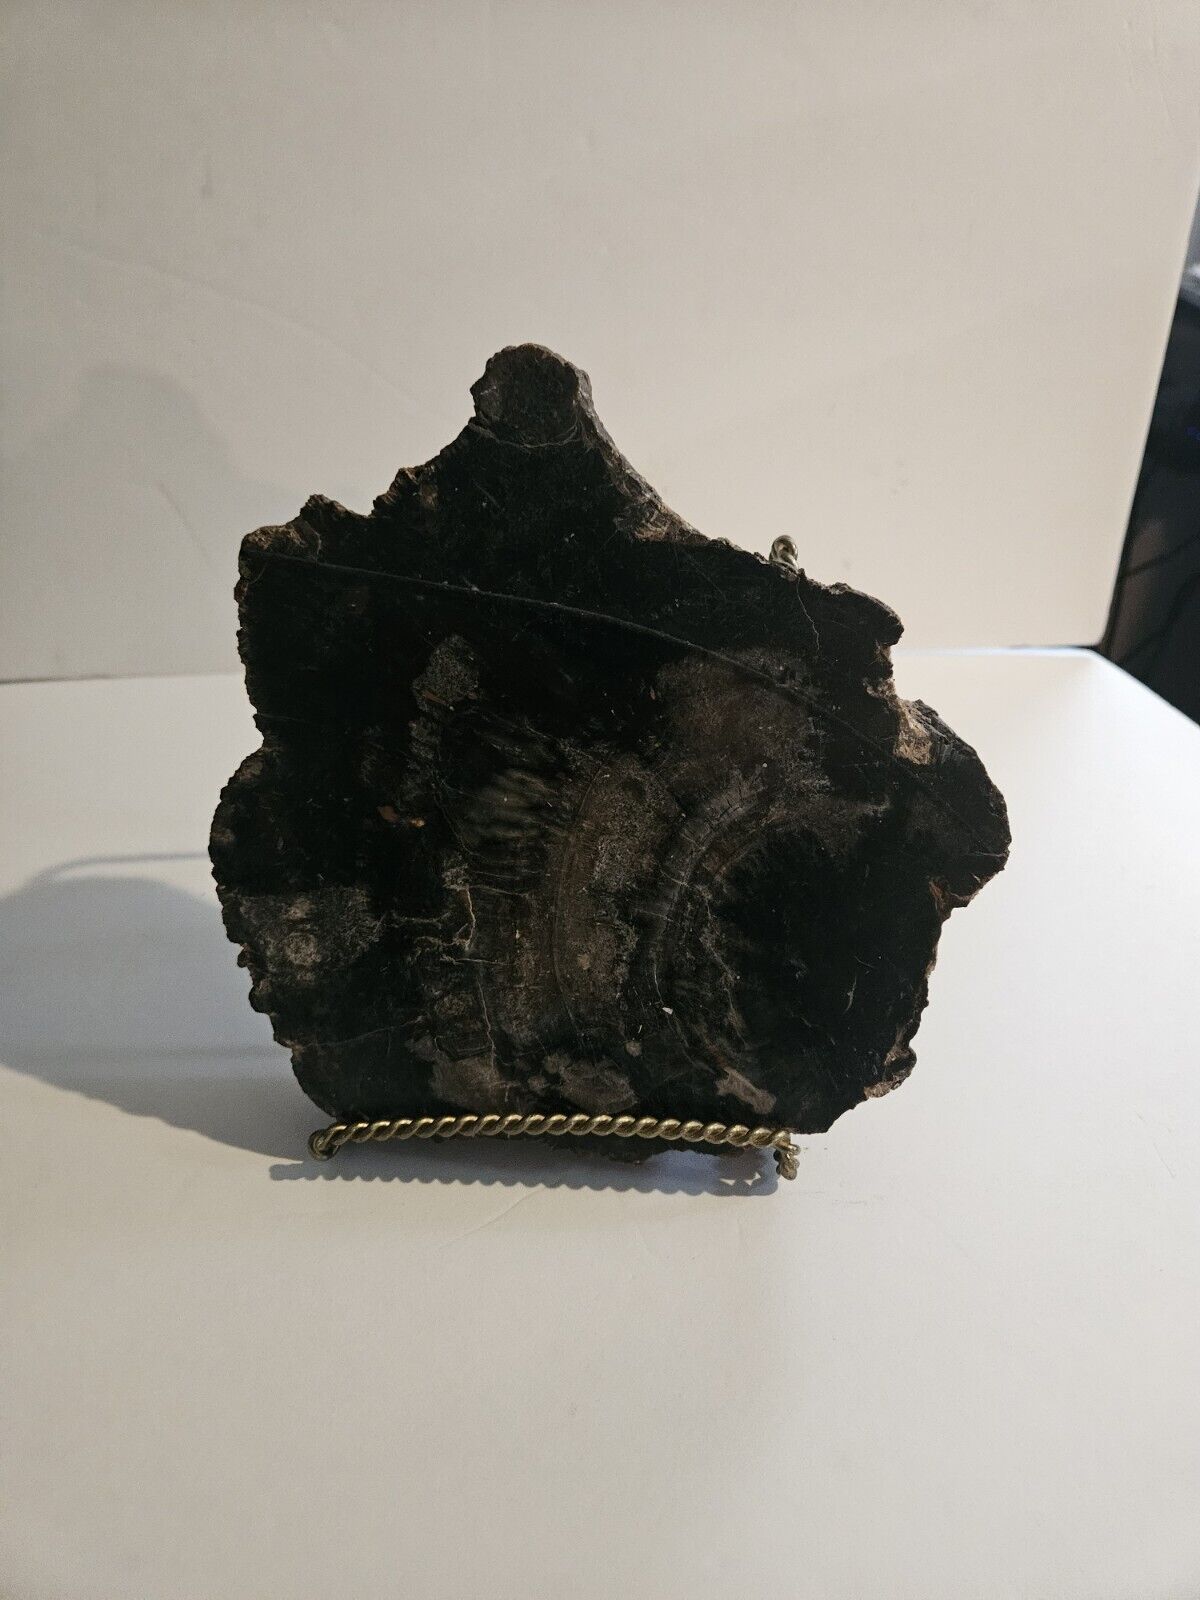 Rare Petrified Wood Slab 9” Wide 7+ Pounds - Naturally Occurring Uranium